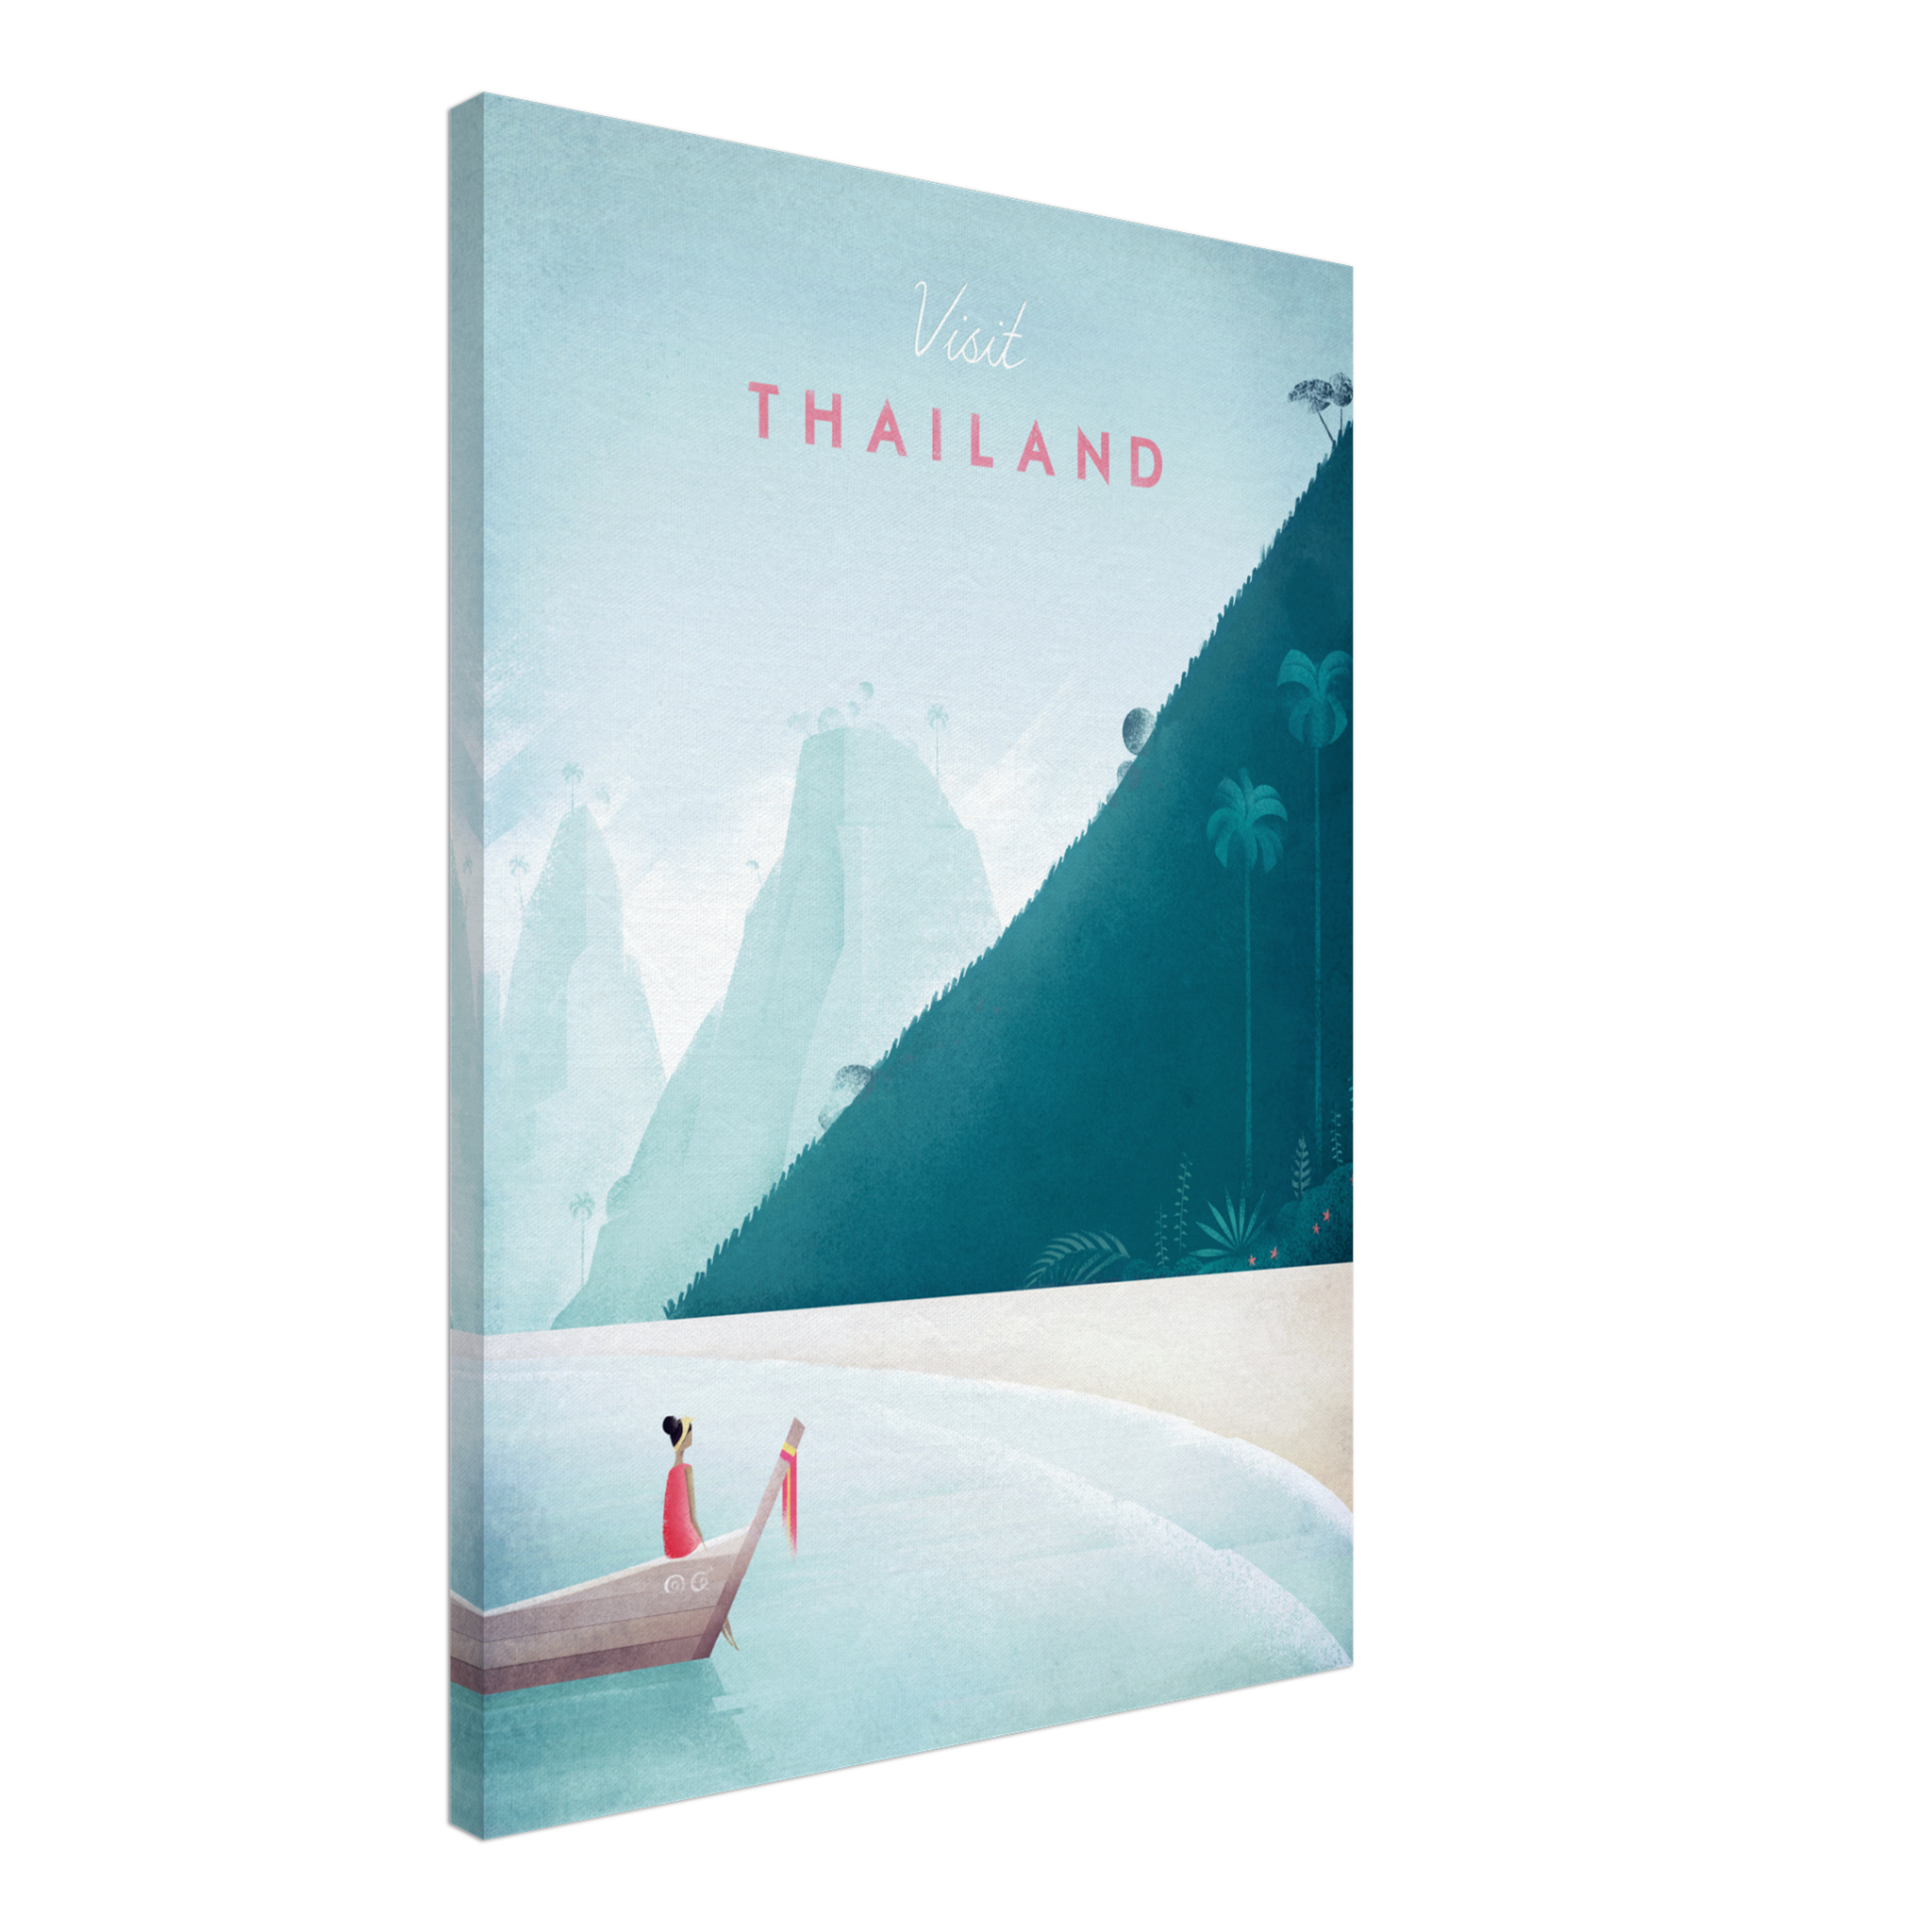 Thailand Canvas